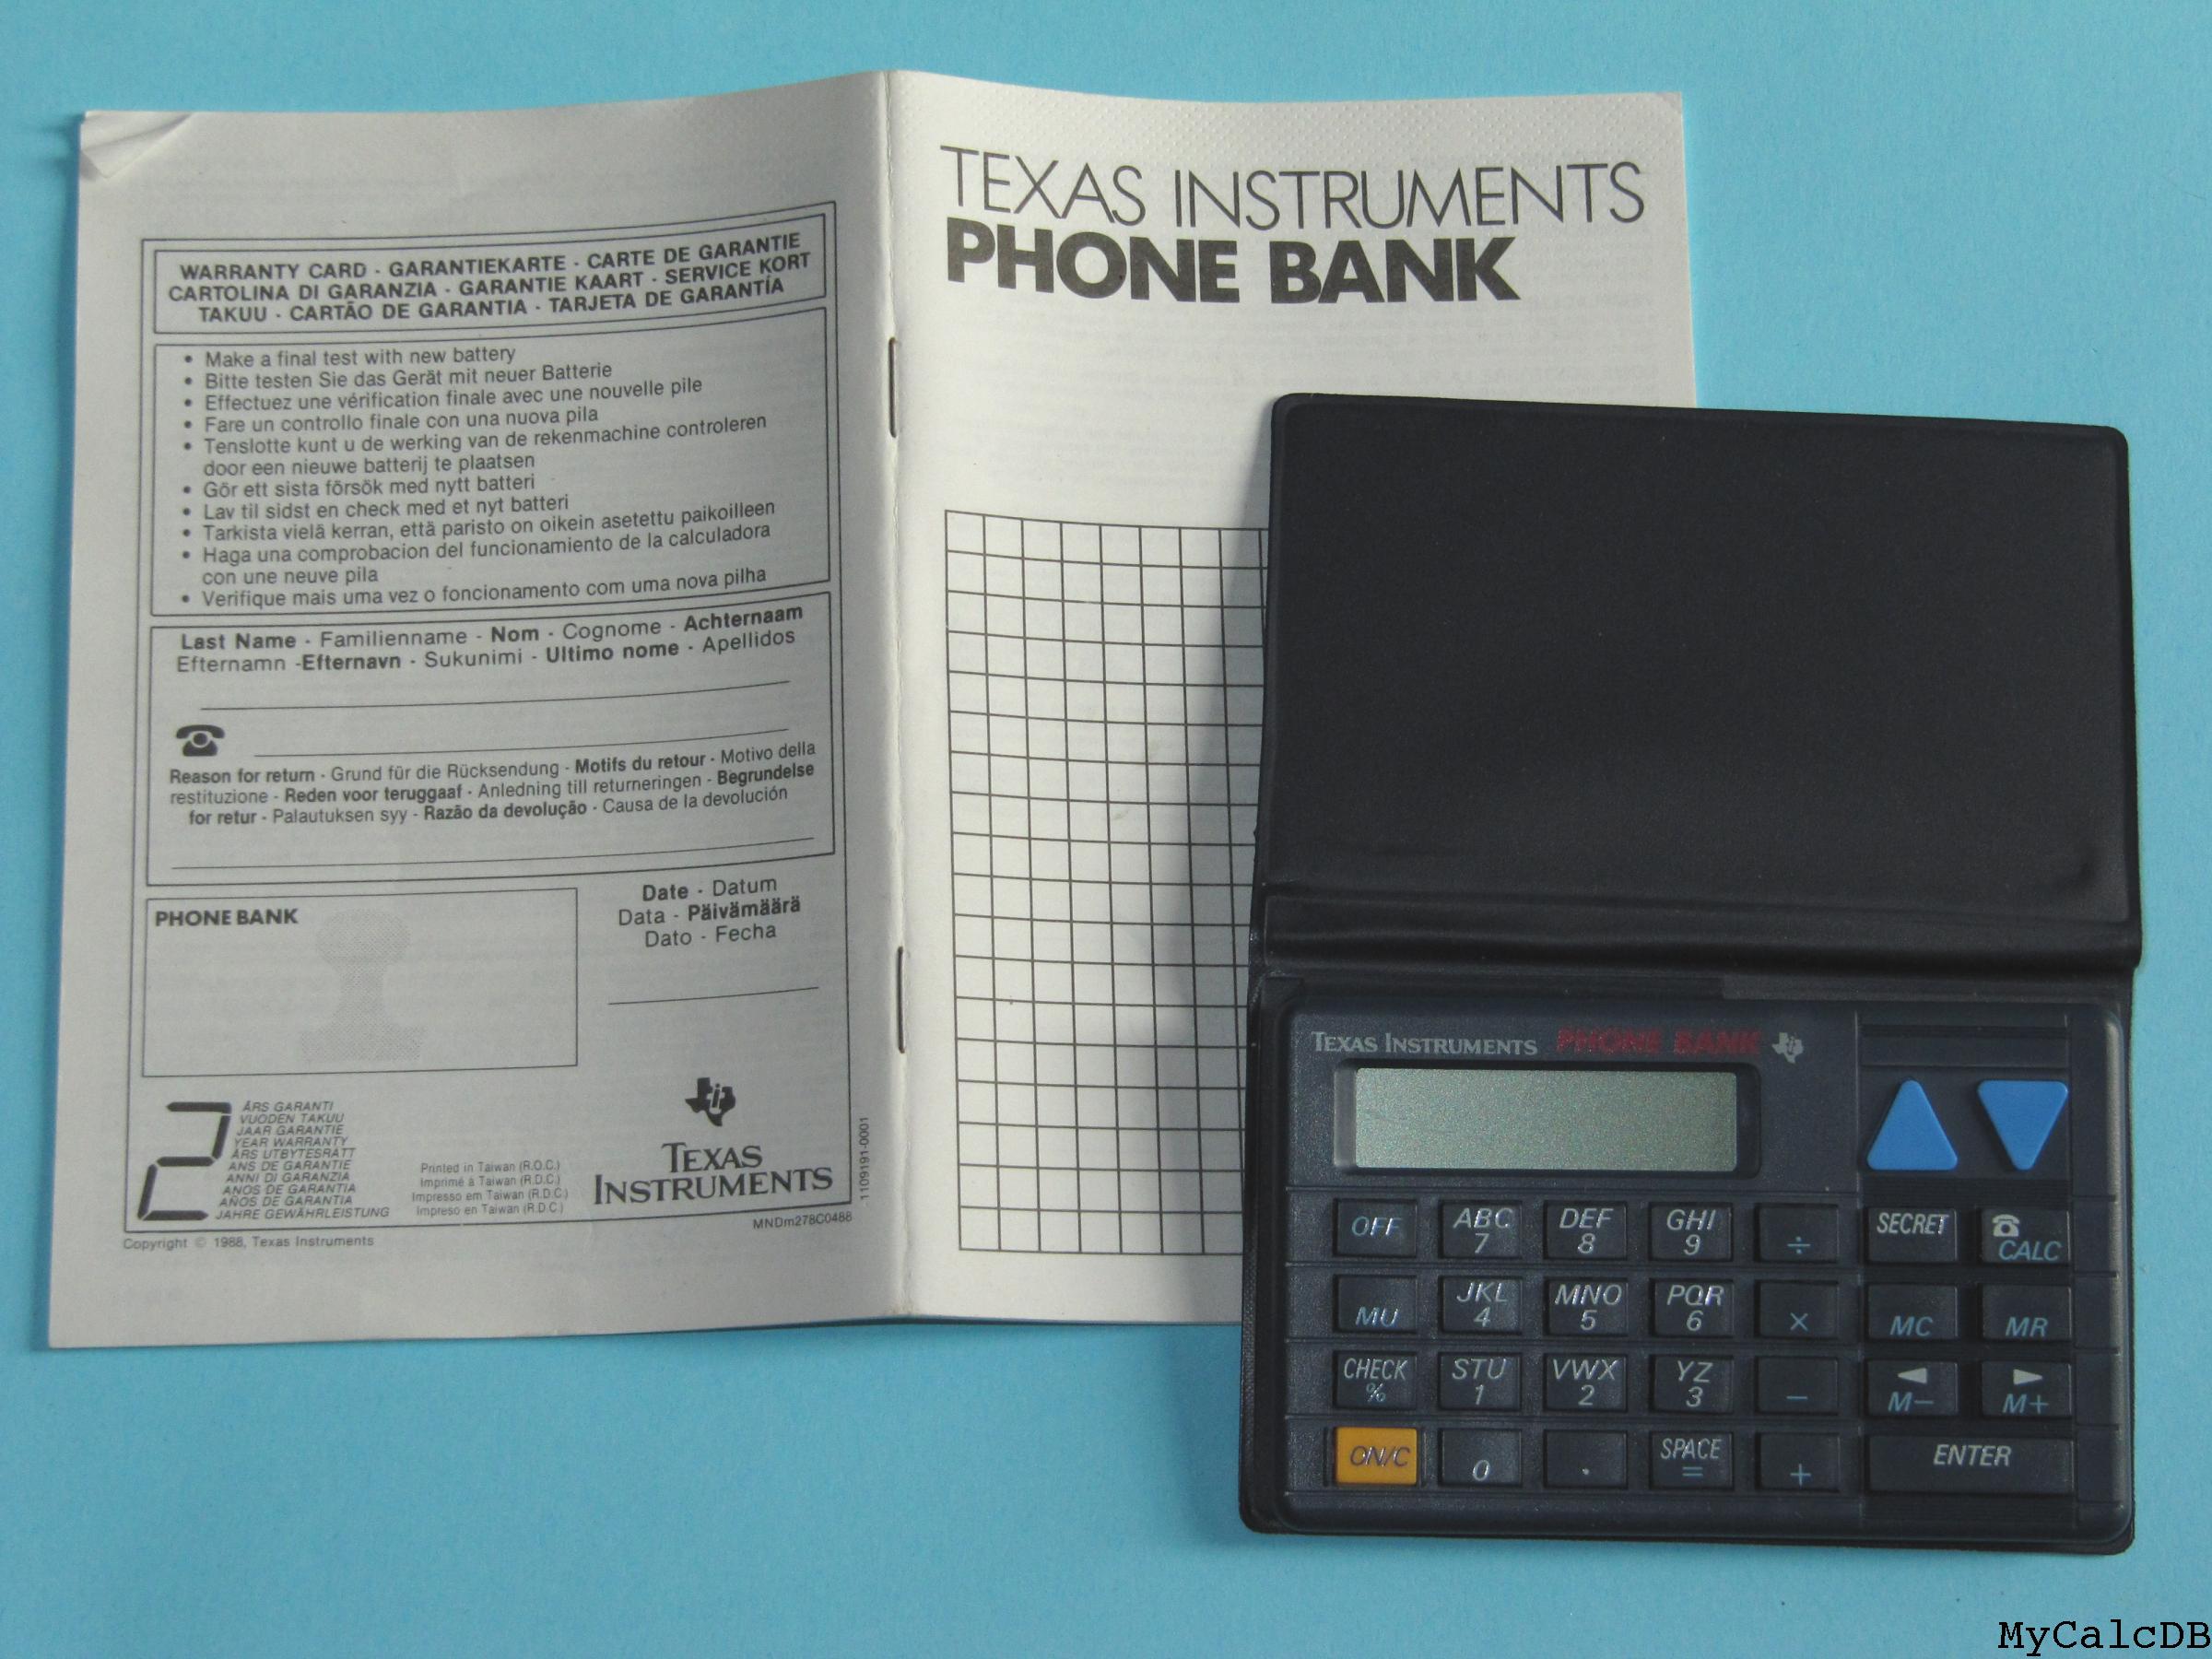 Texas Instruments PHONE BANK